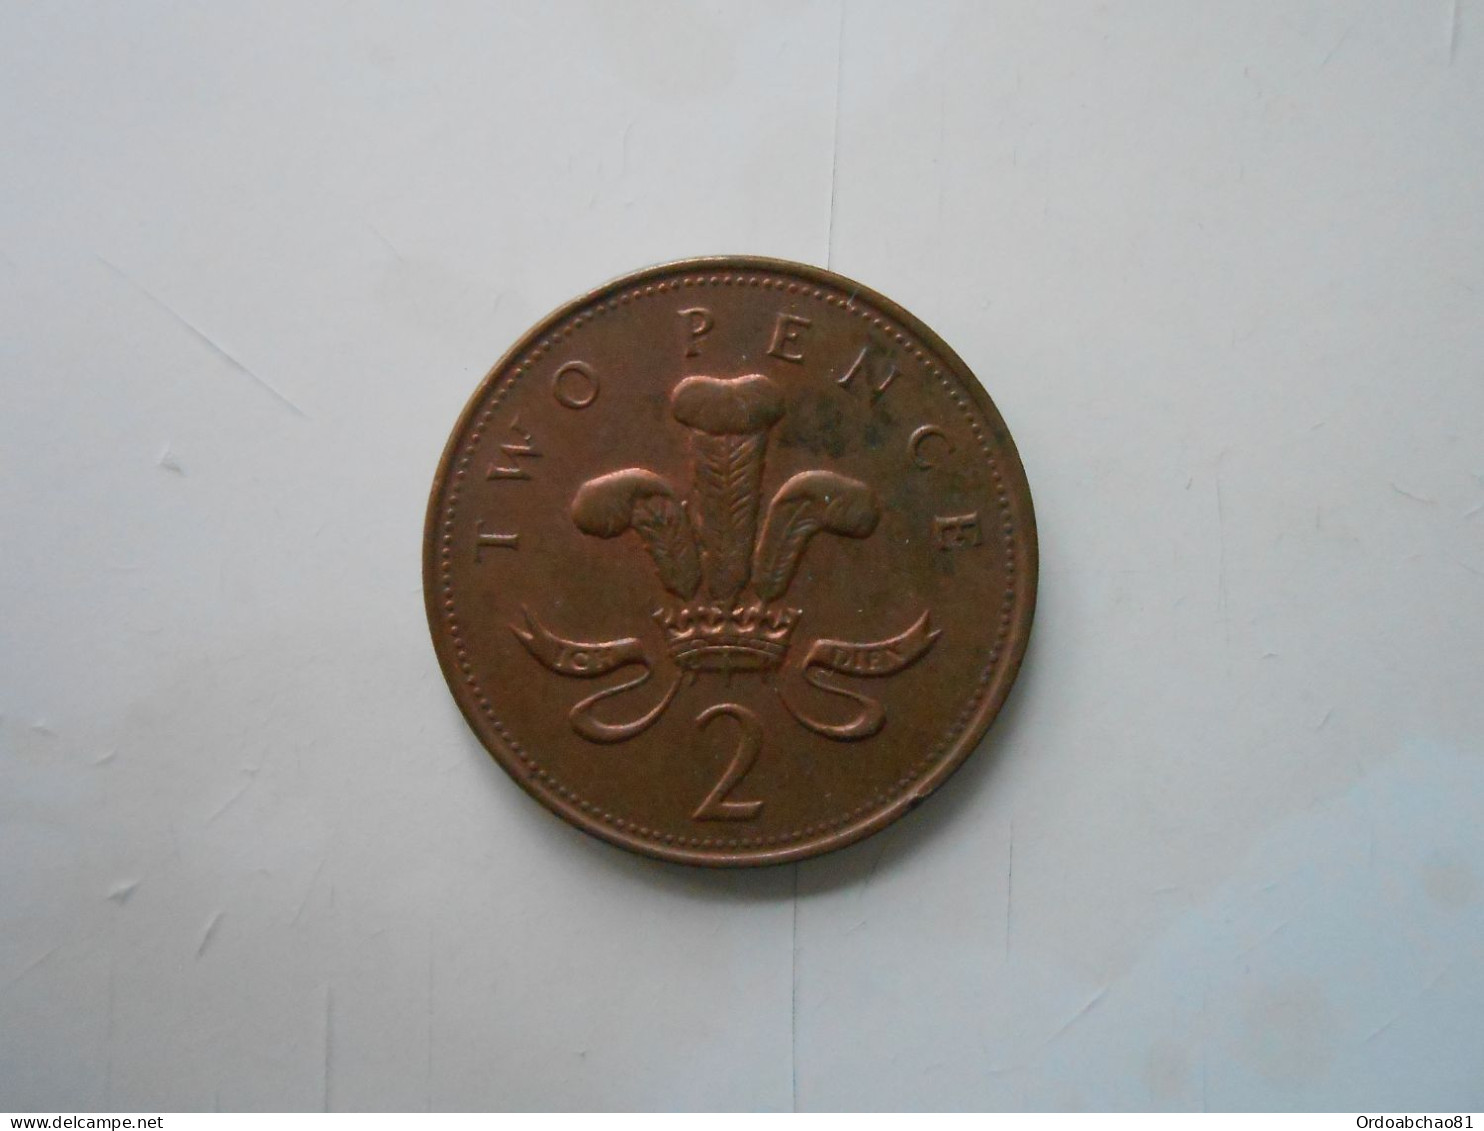 2 Pence - 2001 - 2 Pence & 2 New Pence